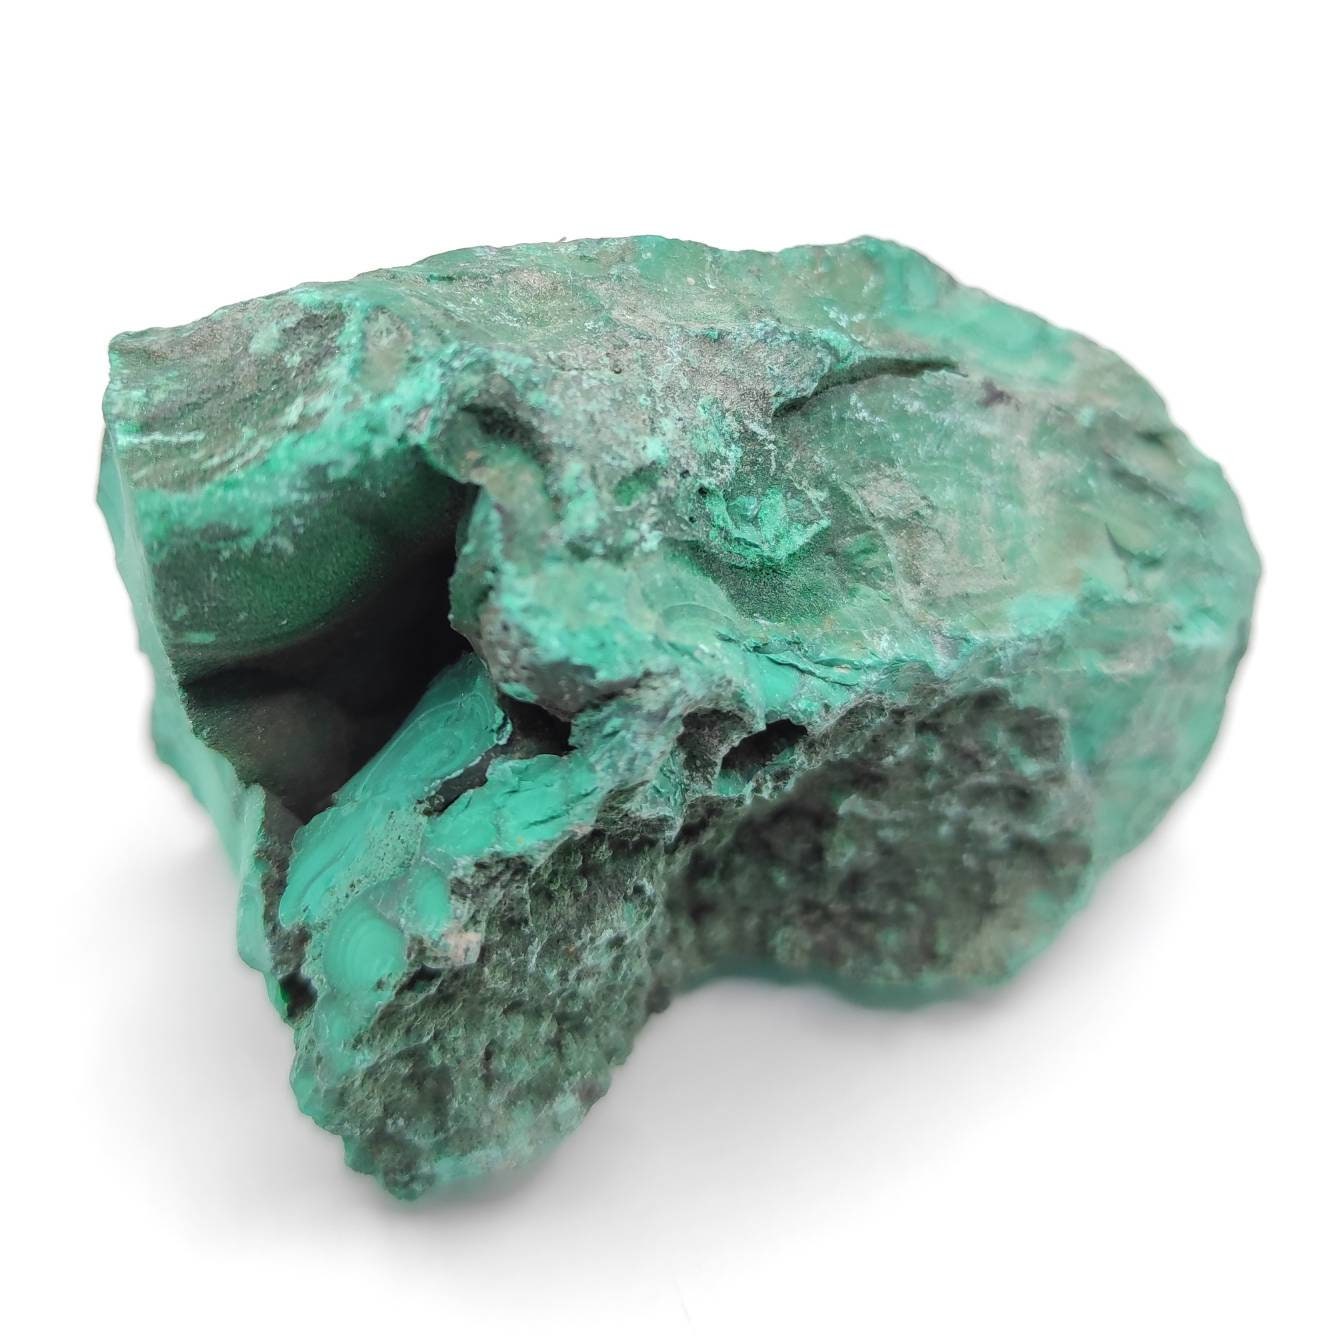 136g Rough Malachite Chunk - Mineral Specimen - Natural Green Crystals - Green Malachite - Natural Raw Crystal Cluster - Unique Specimen